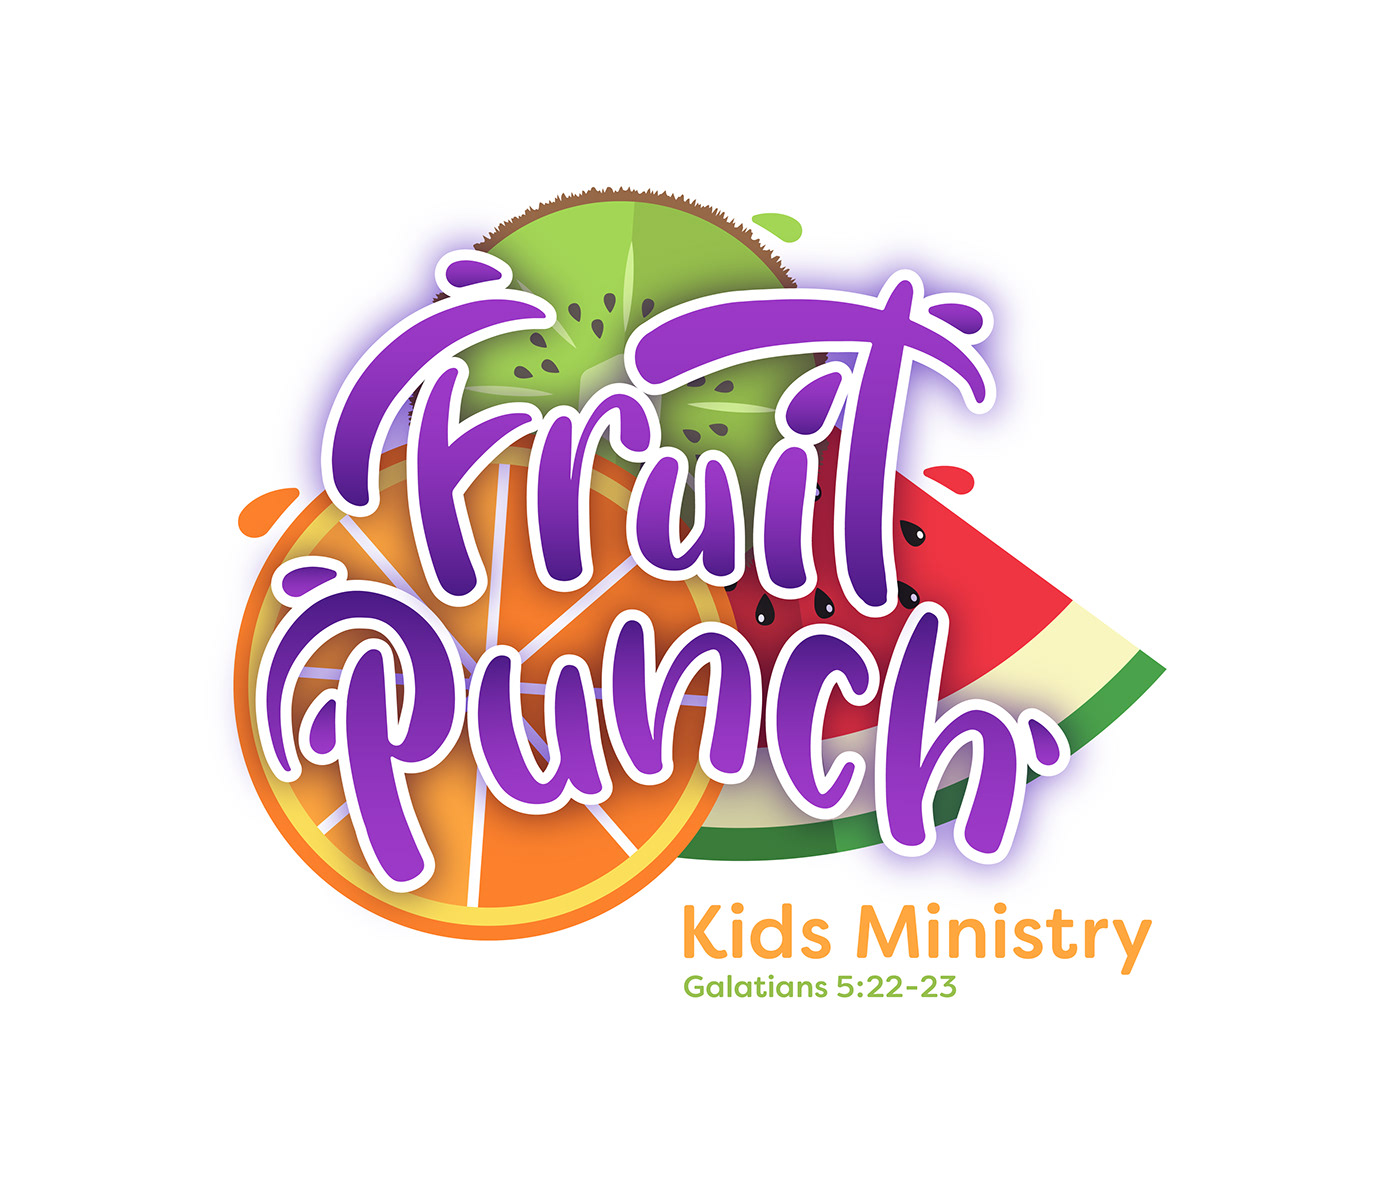 branding  church Christian Ministry ILLUSTRATION  fruits juicy sweet Fun